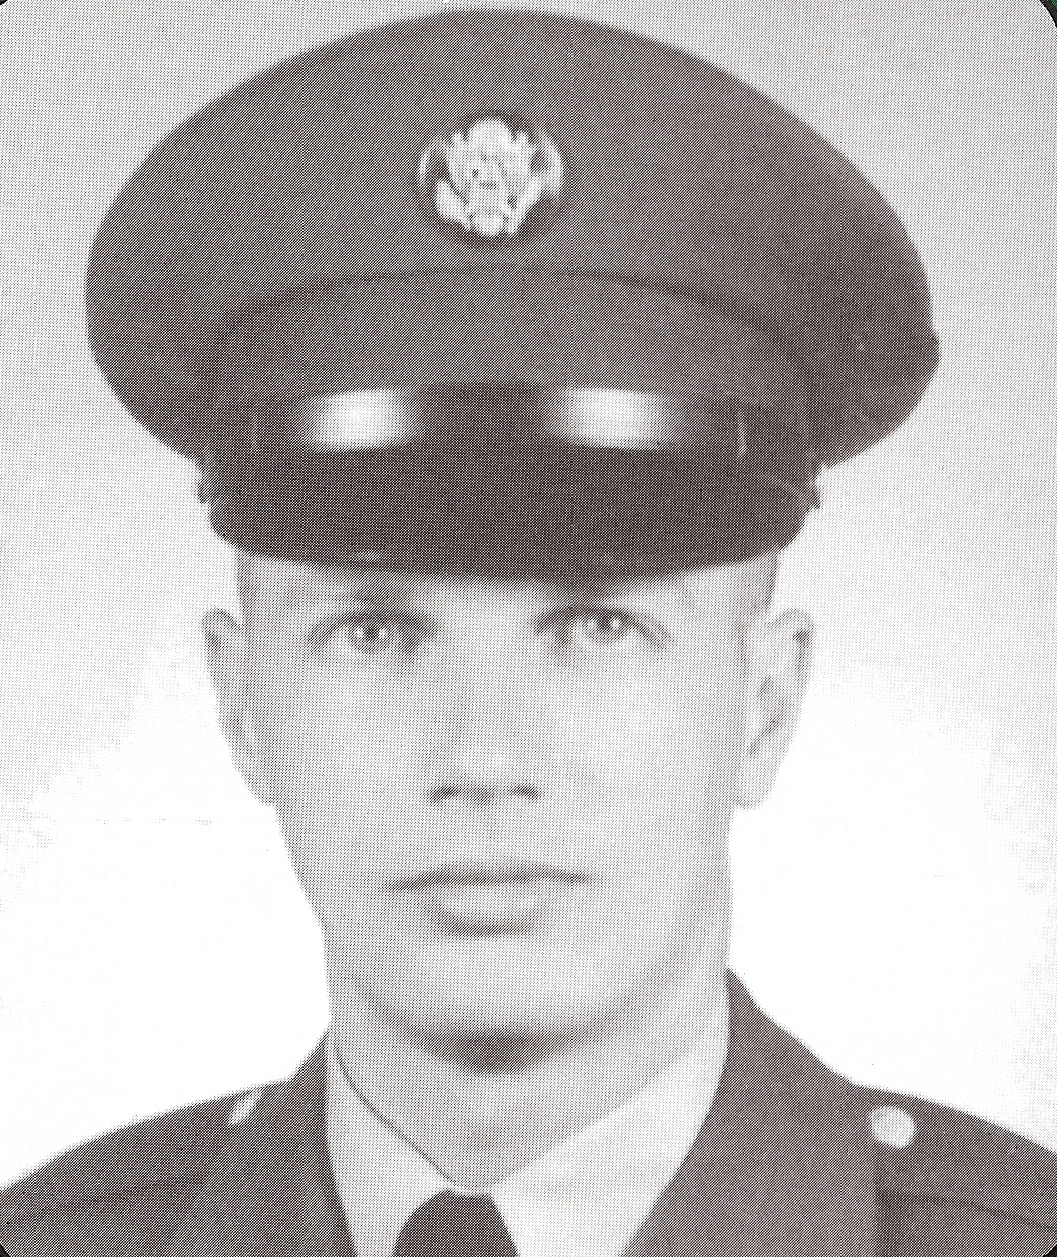 Ronnie K. Bailey, US Army, 1962